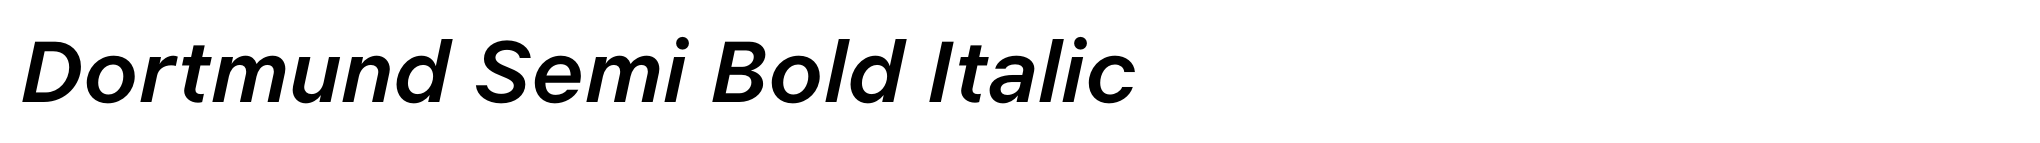 Dortmund Semi Bold Italic image